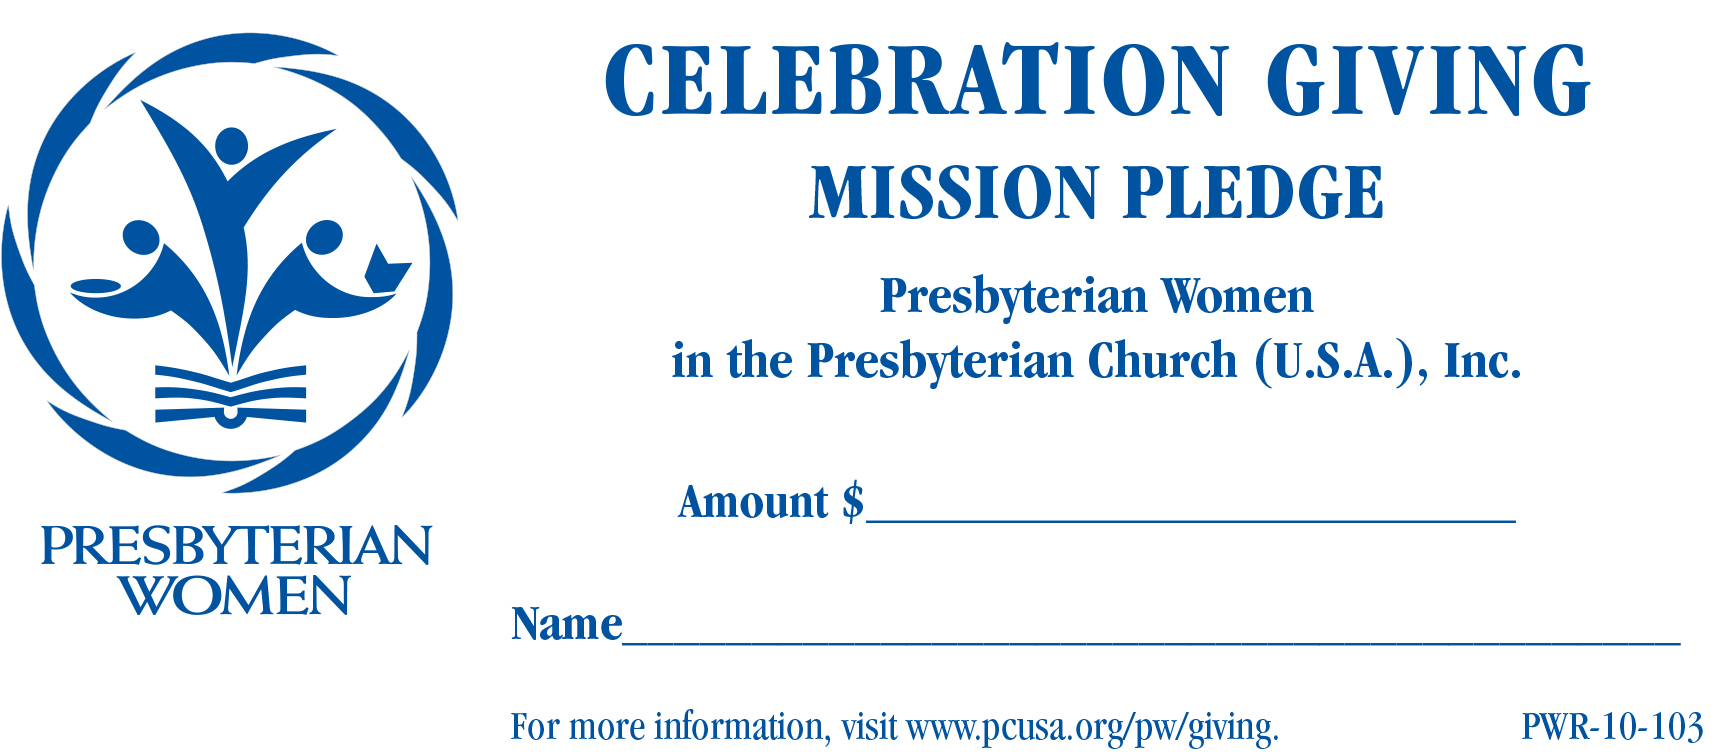 Presbyterian Women Pledge Collection Envelope Pack of 50